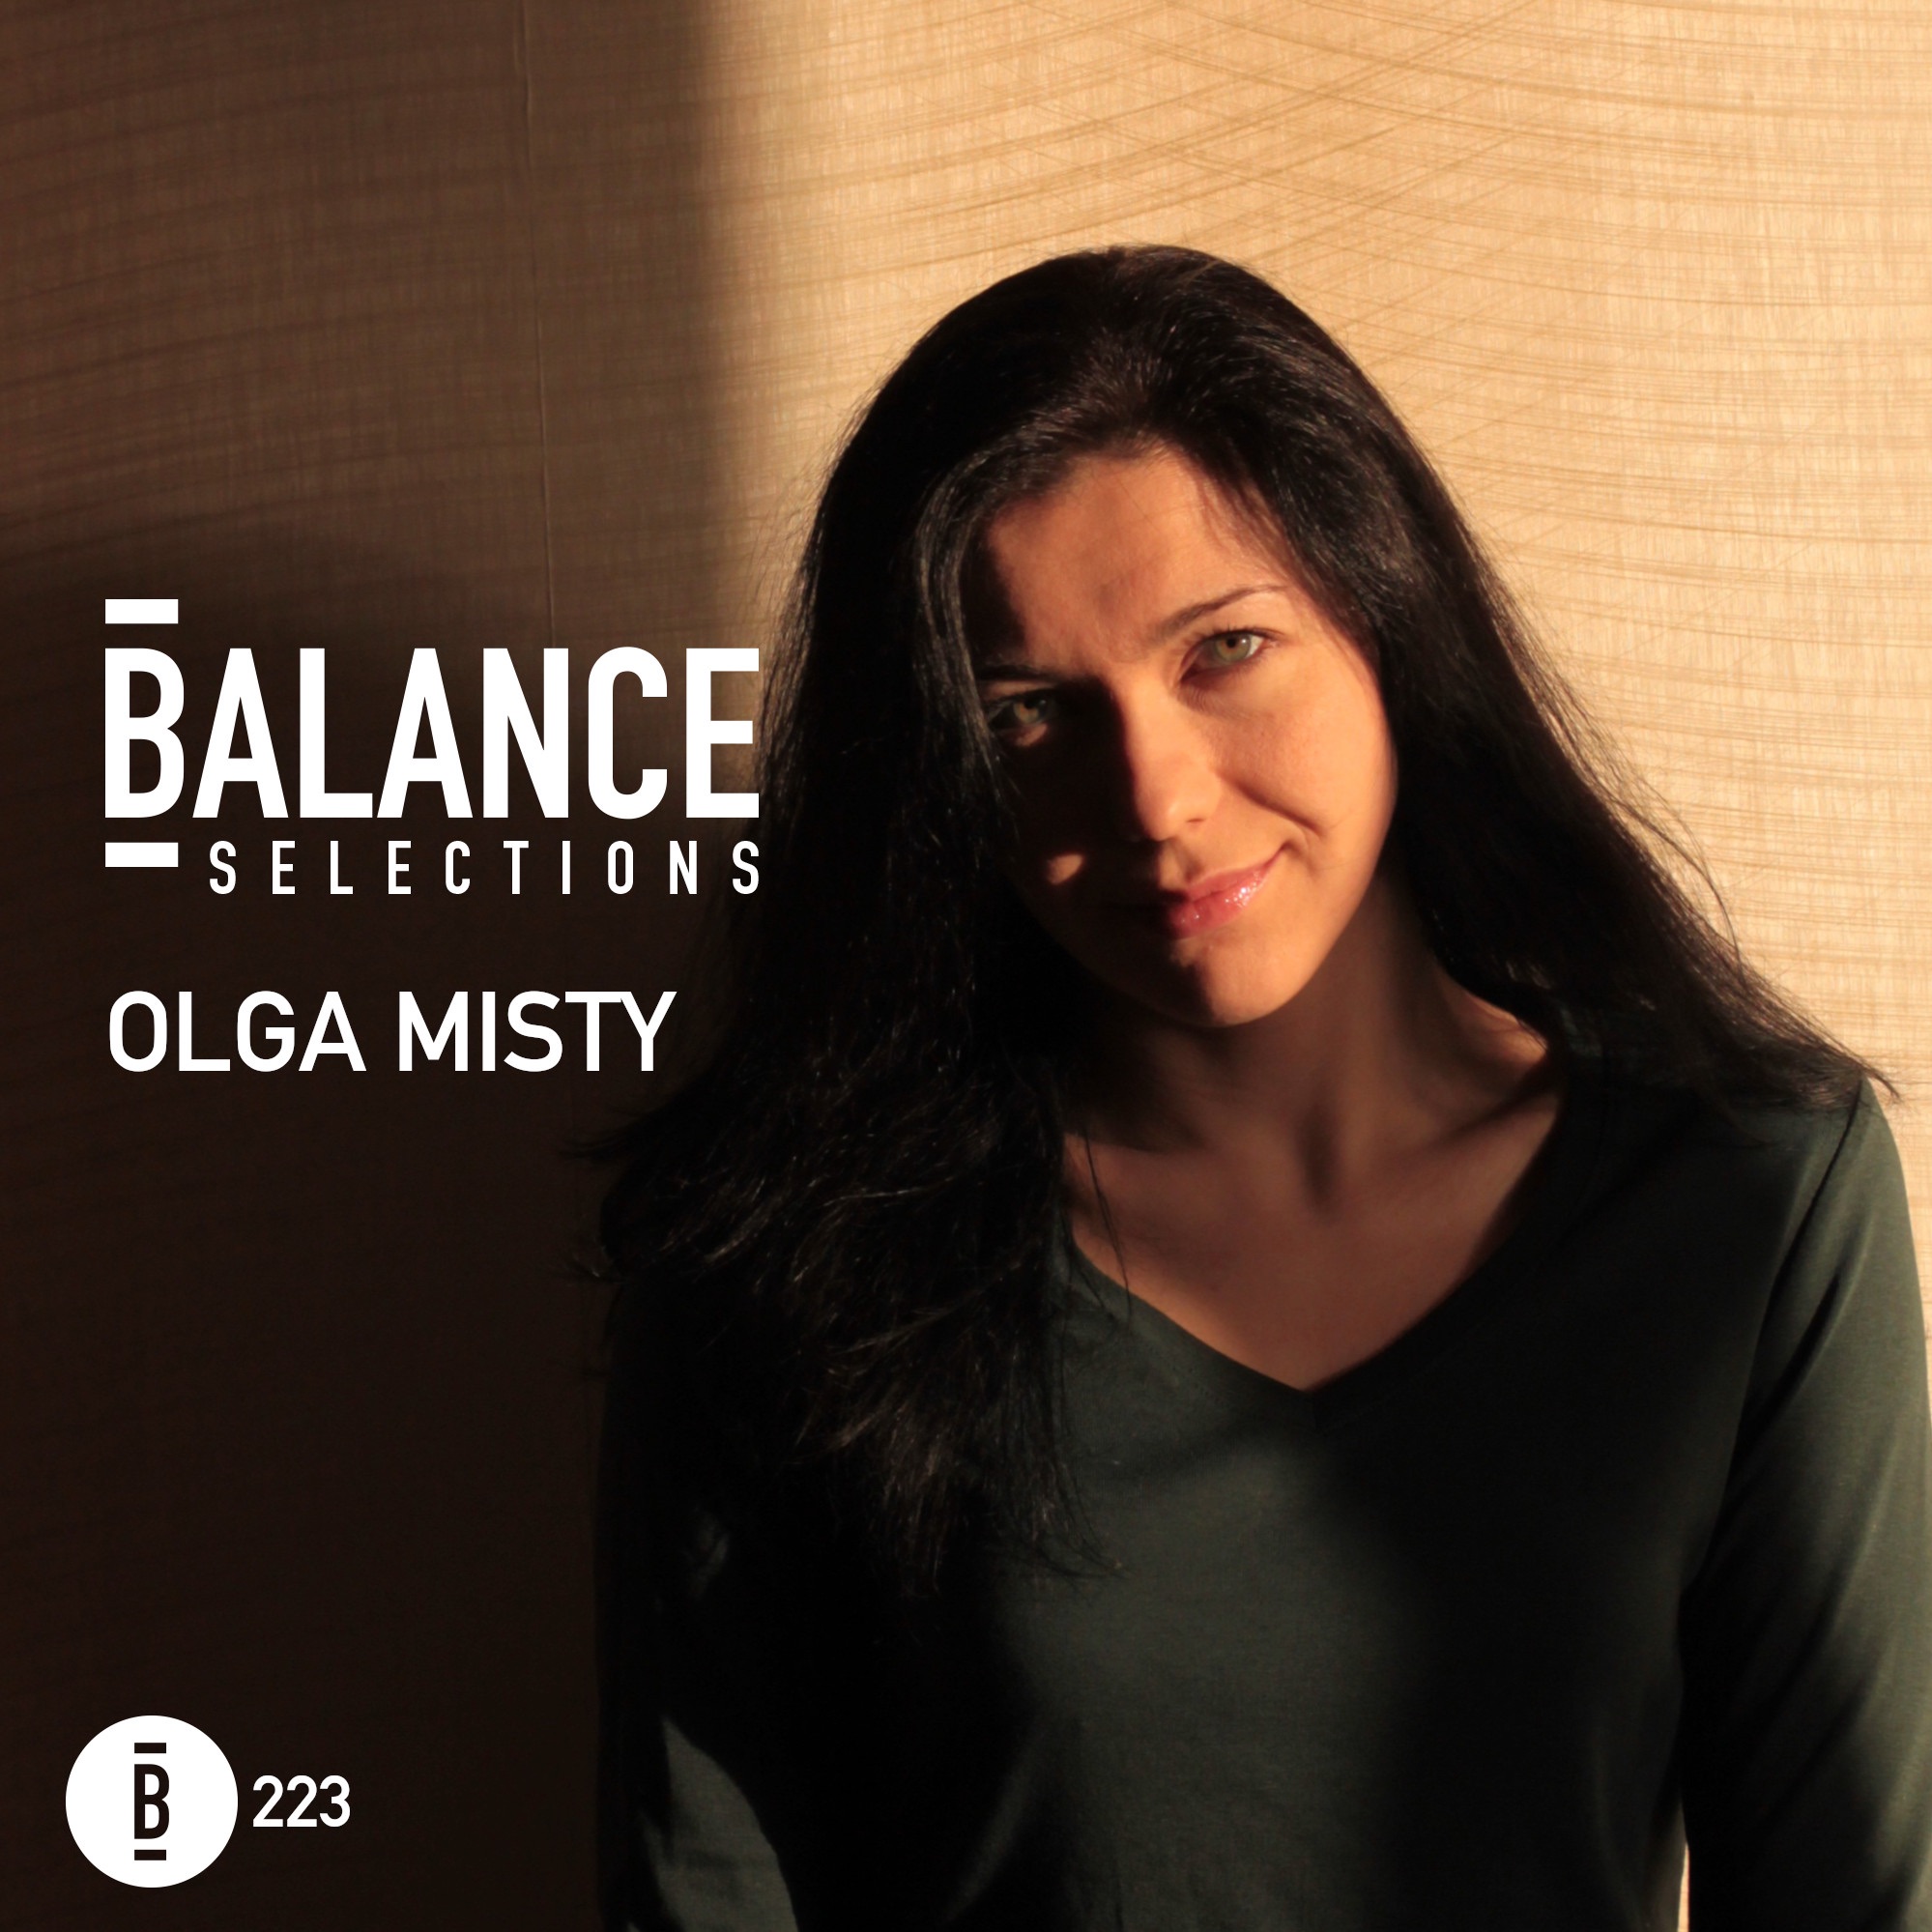 Aflaai Balance Selections 223: Olga Misty